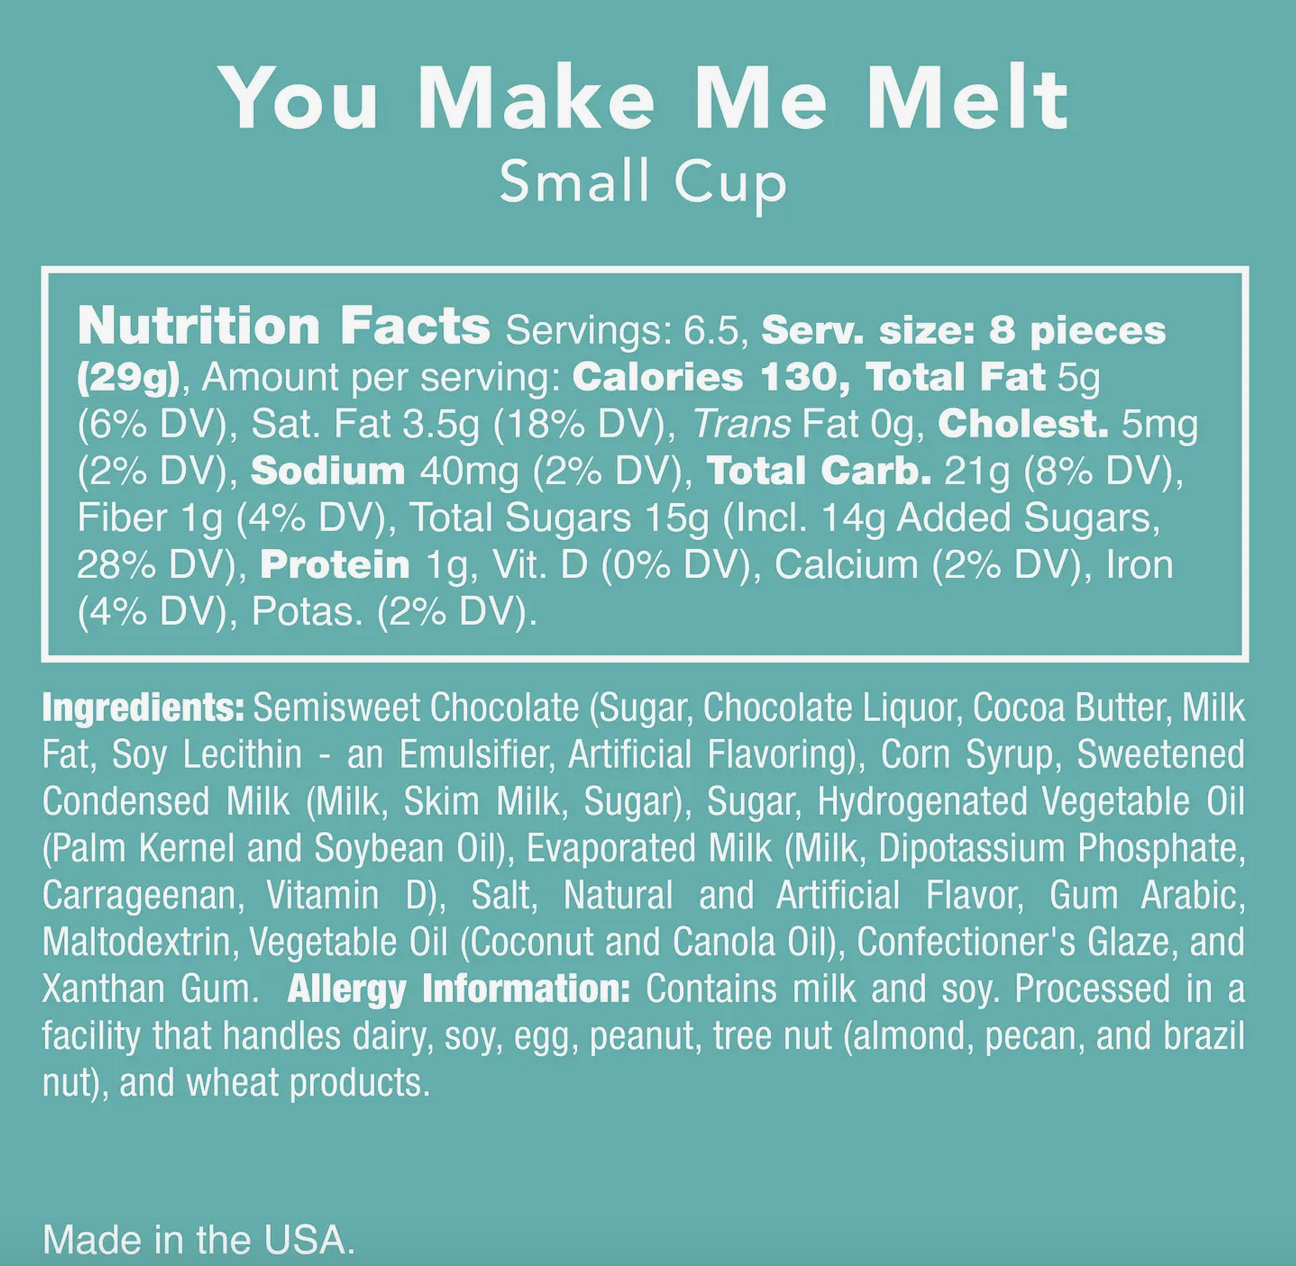 Candy-You Make Me Melt